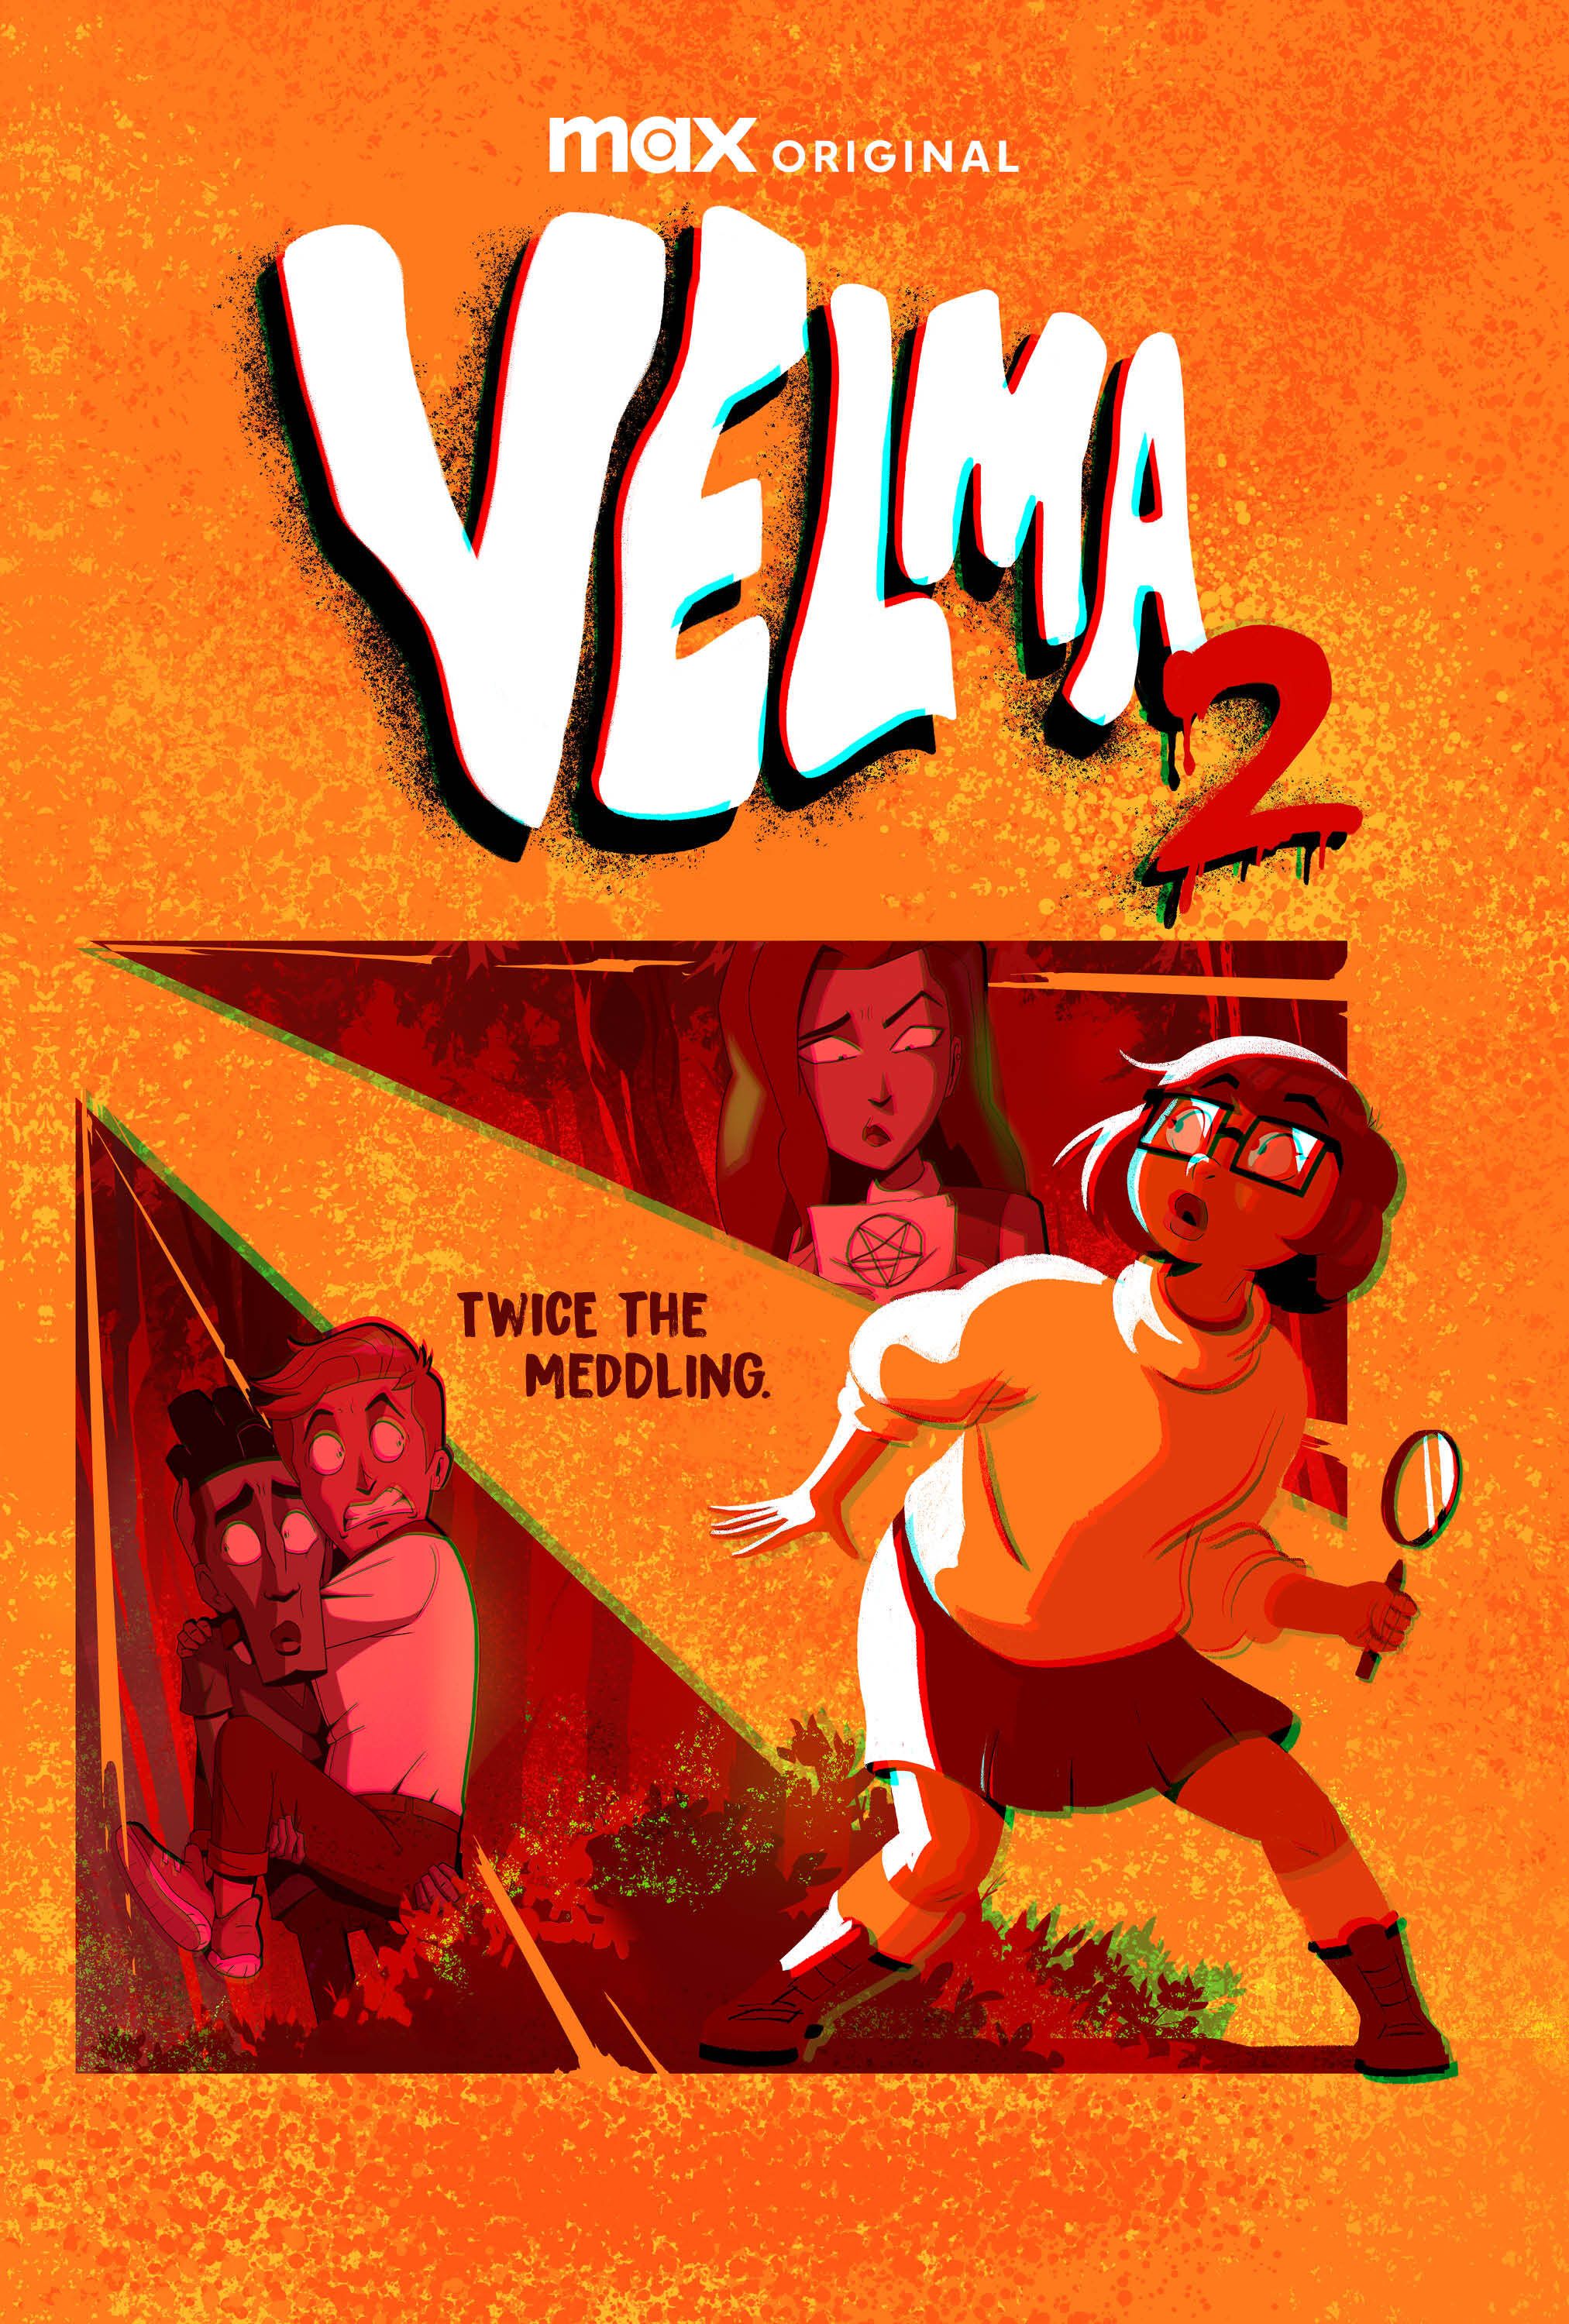 Velma Season 2 Poster Showing Velma Holding a Magnifying Glass